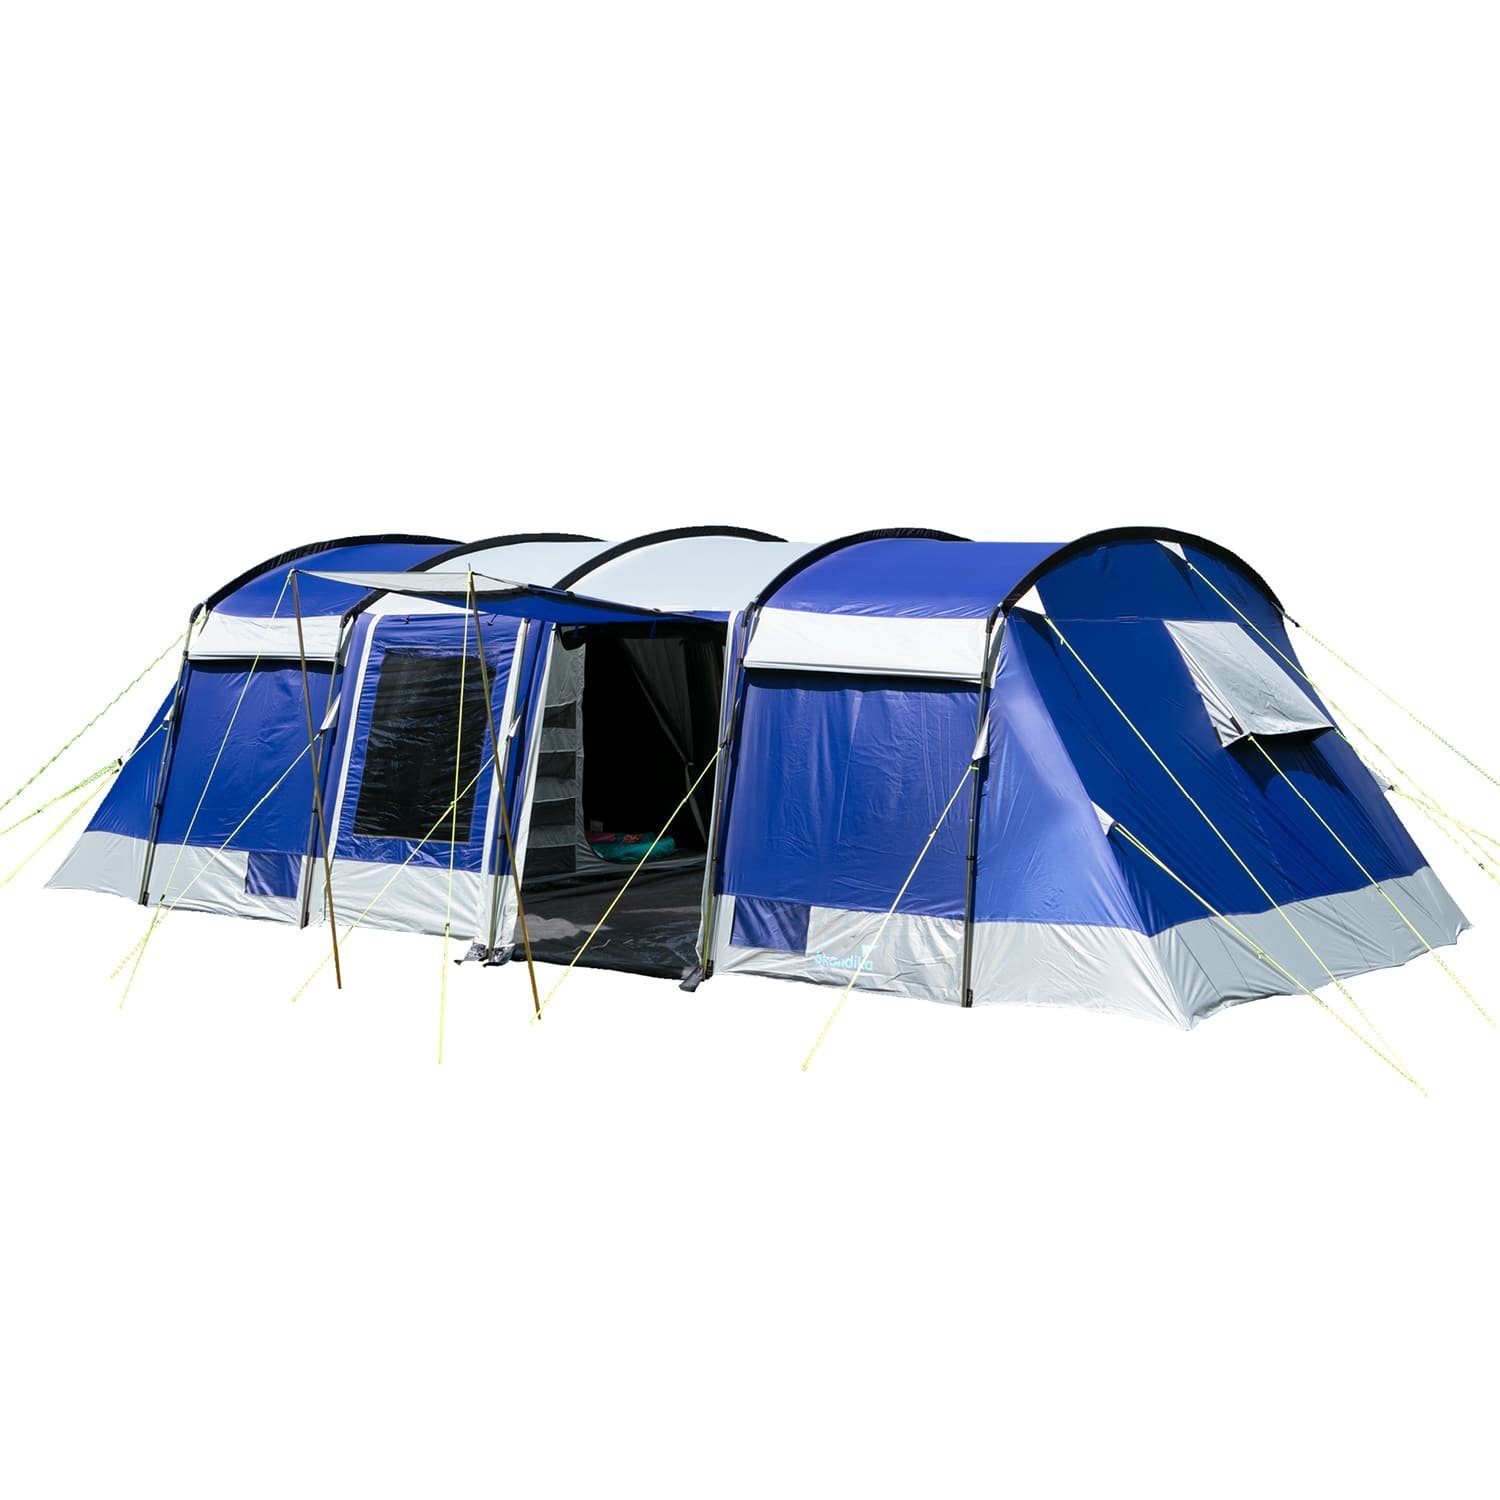 Skandika Tunnelzelt Montana 14 Sleeper (blau), Camping Zelt, Sleeper Technologie, Schwarze Schlafkabinen | Tunnelzelte